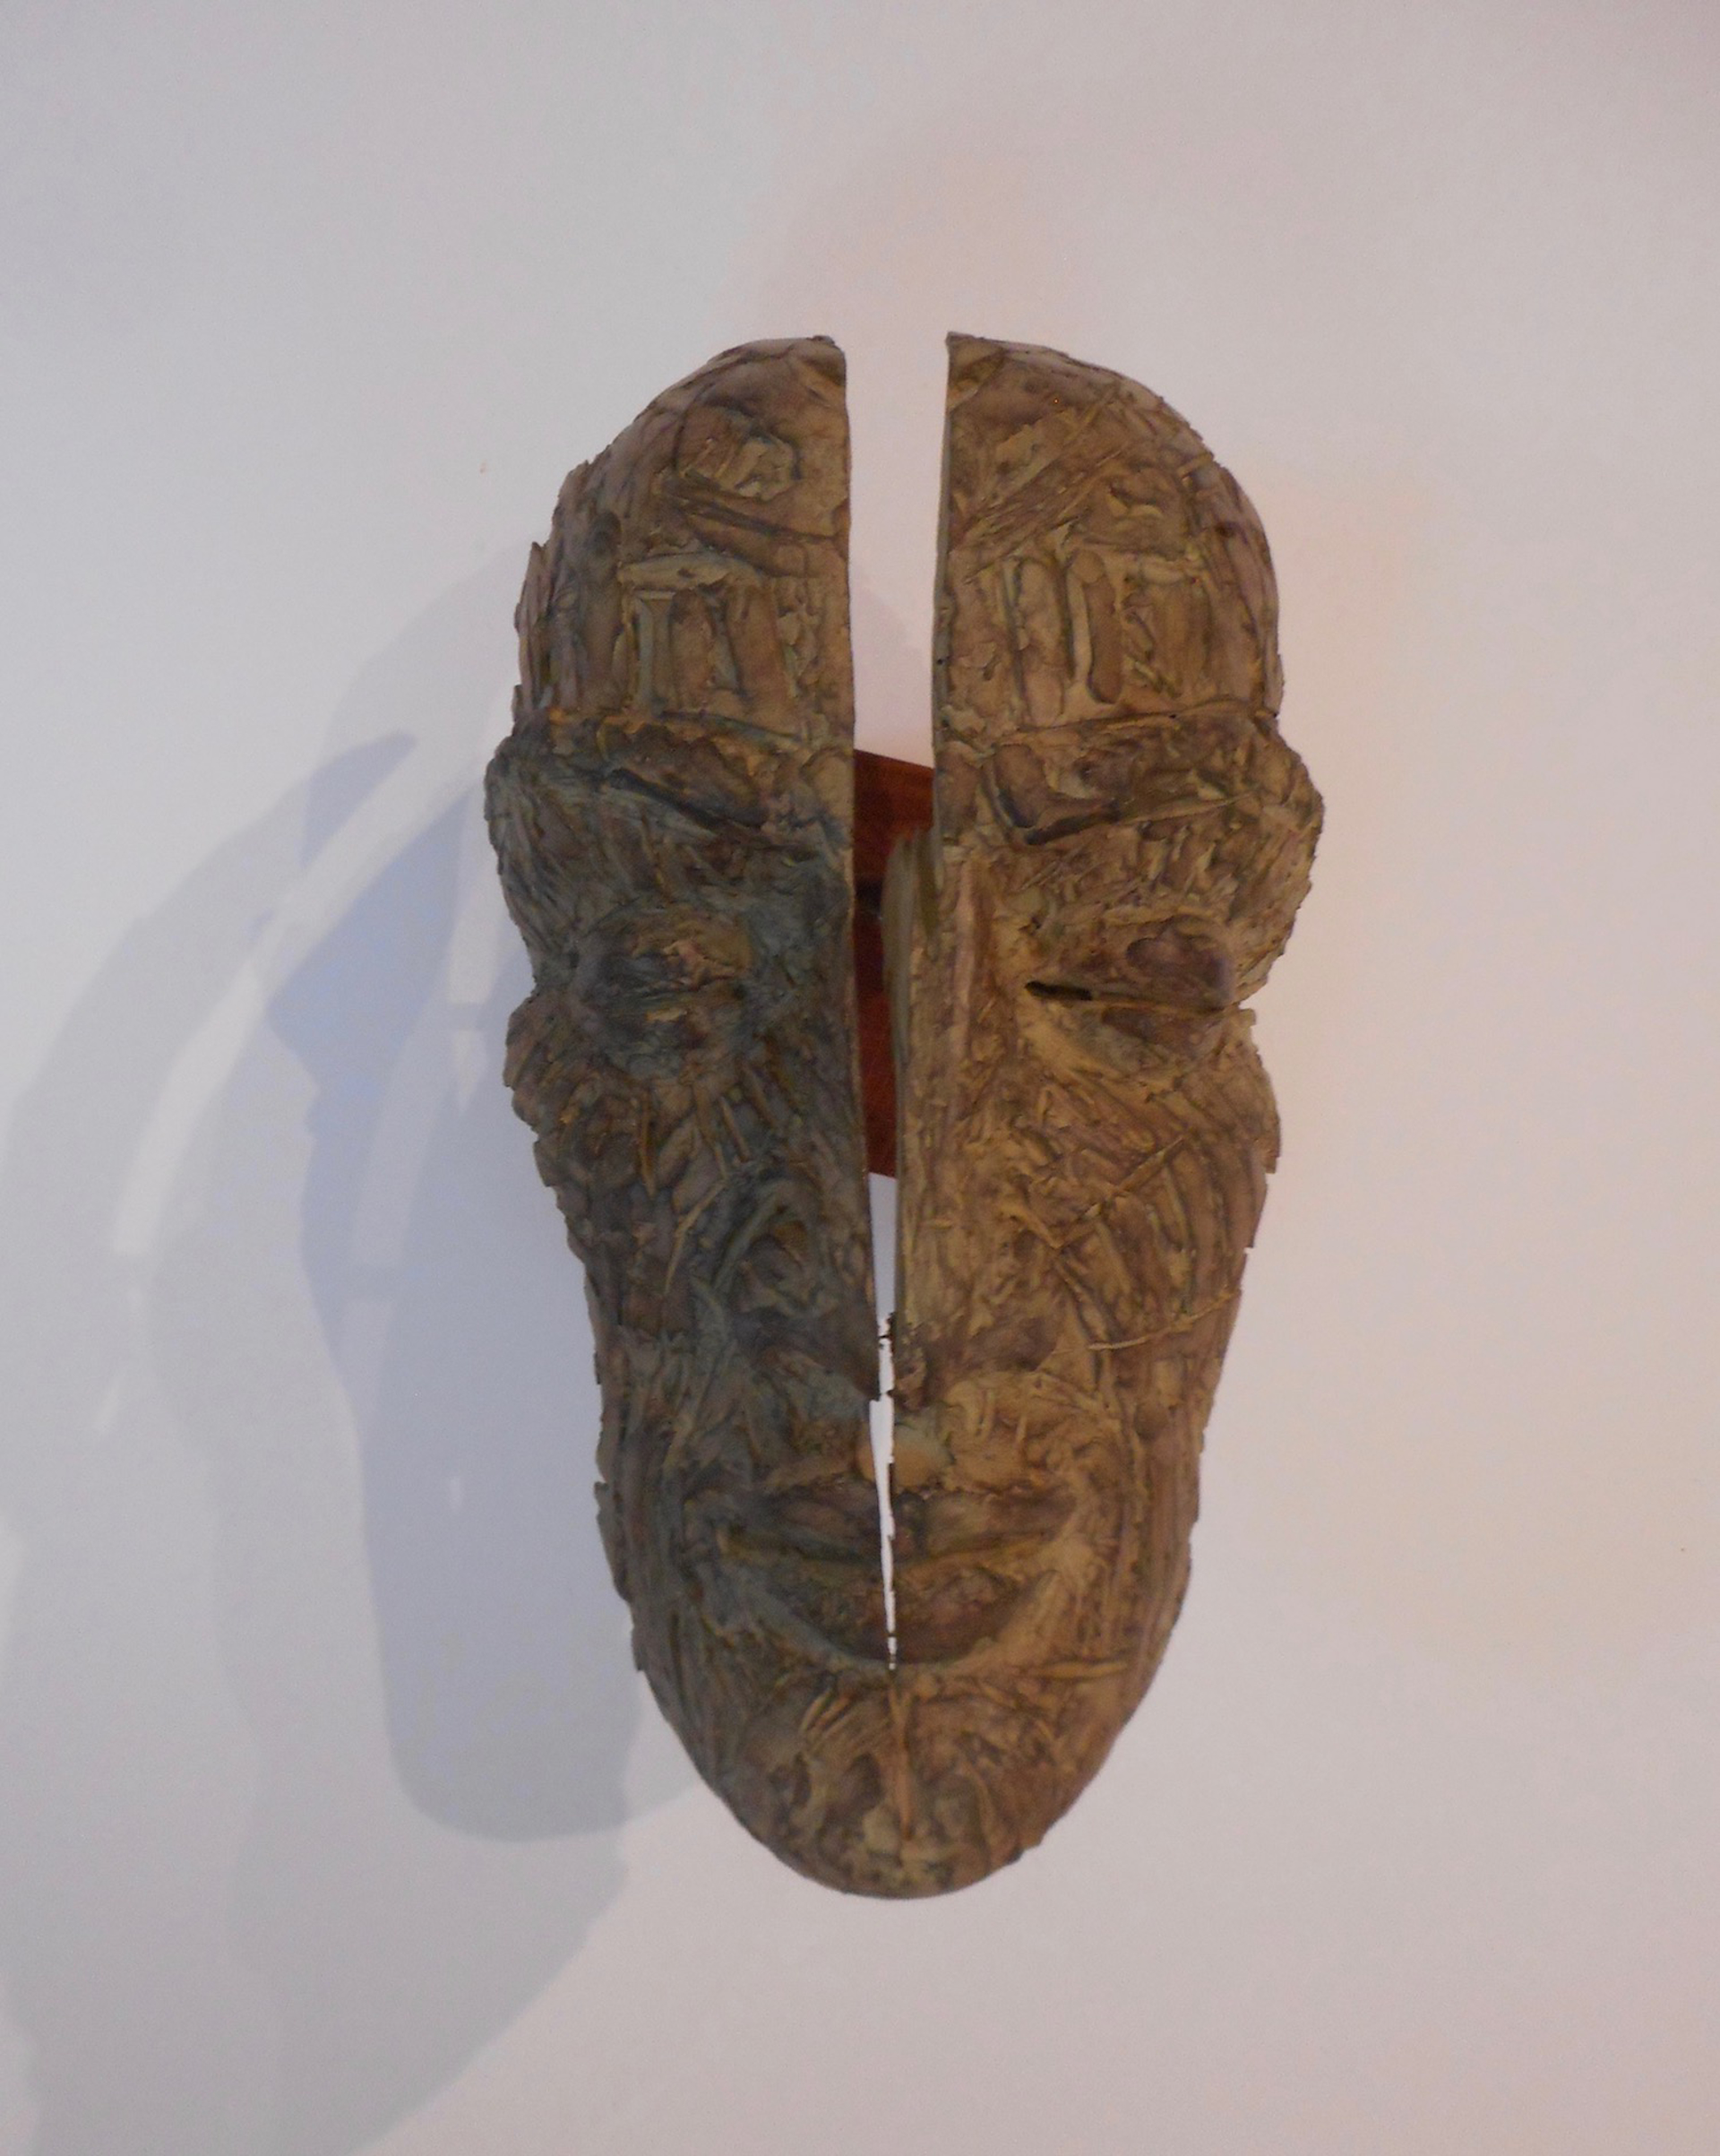 Tovia Mask II (Medium) by Anton Smit